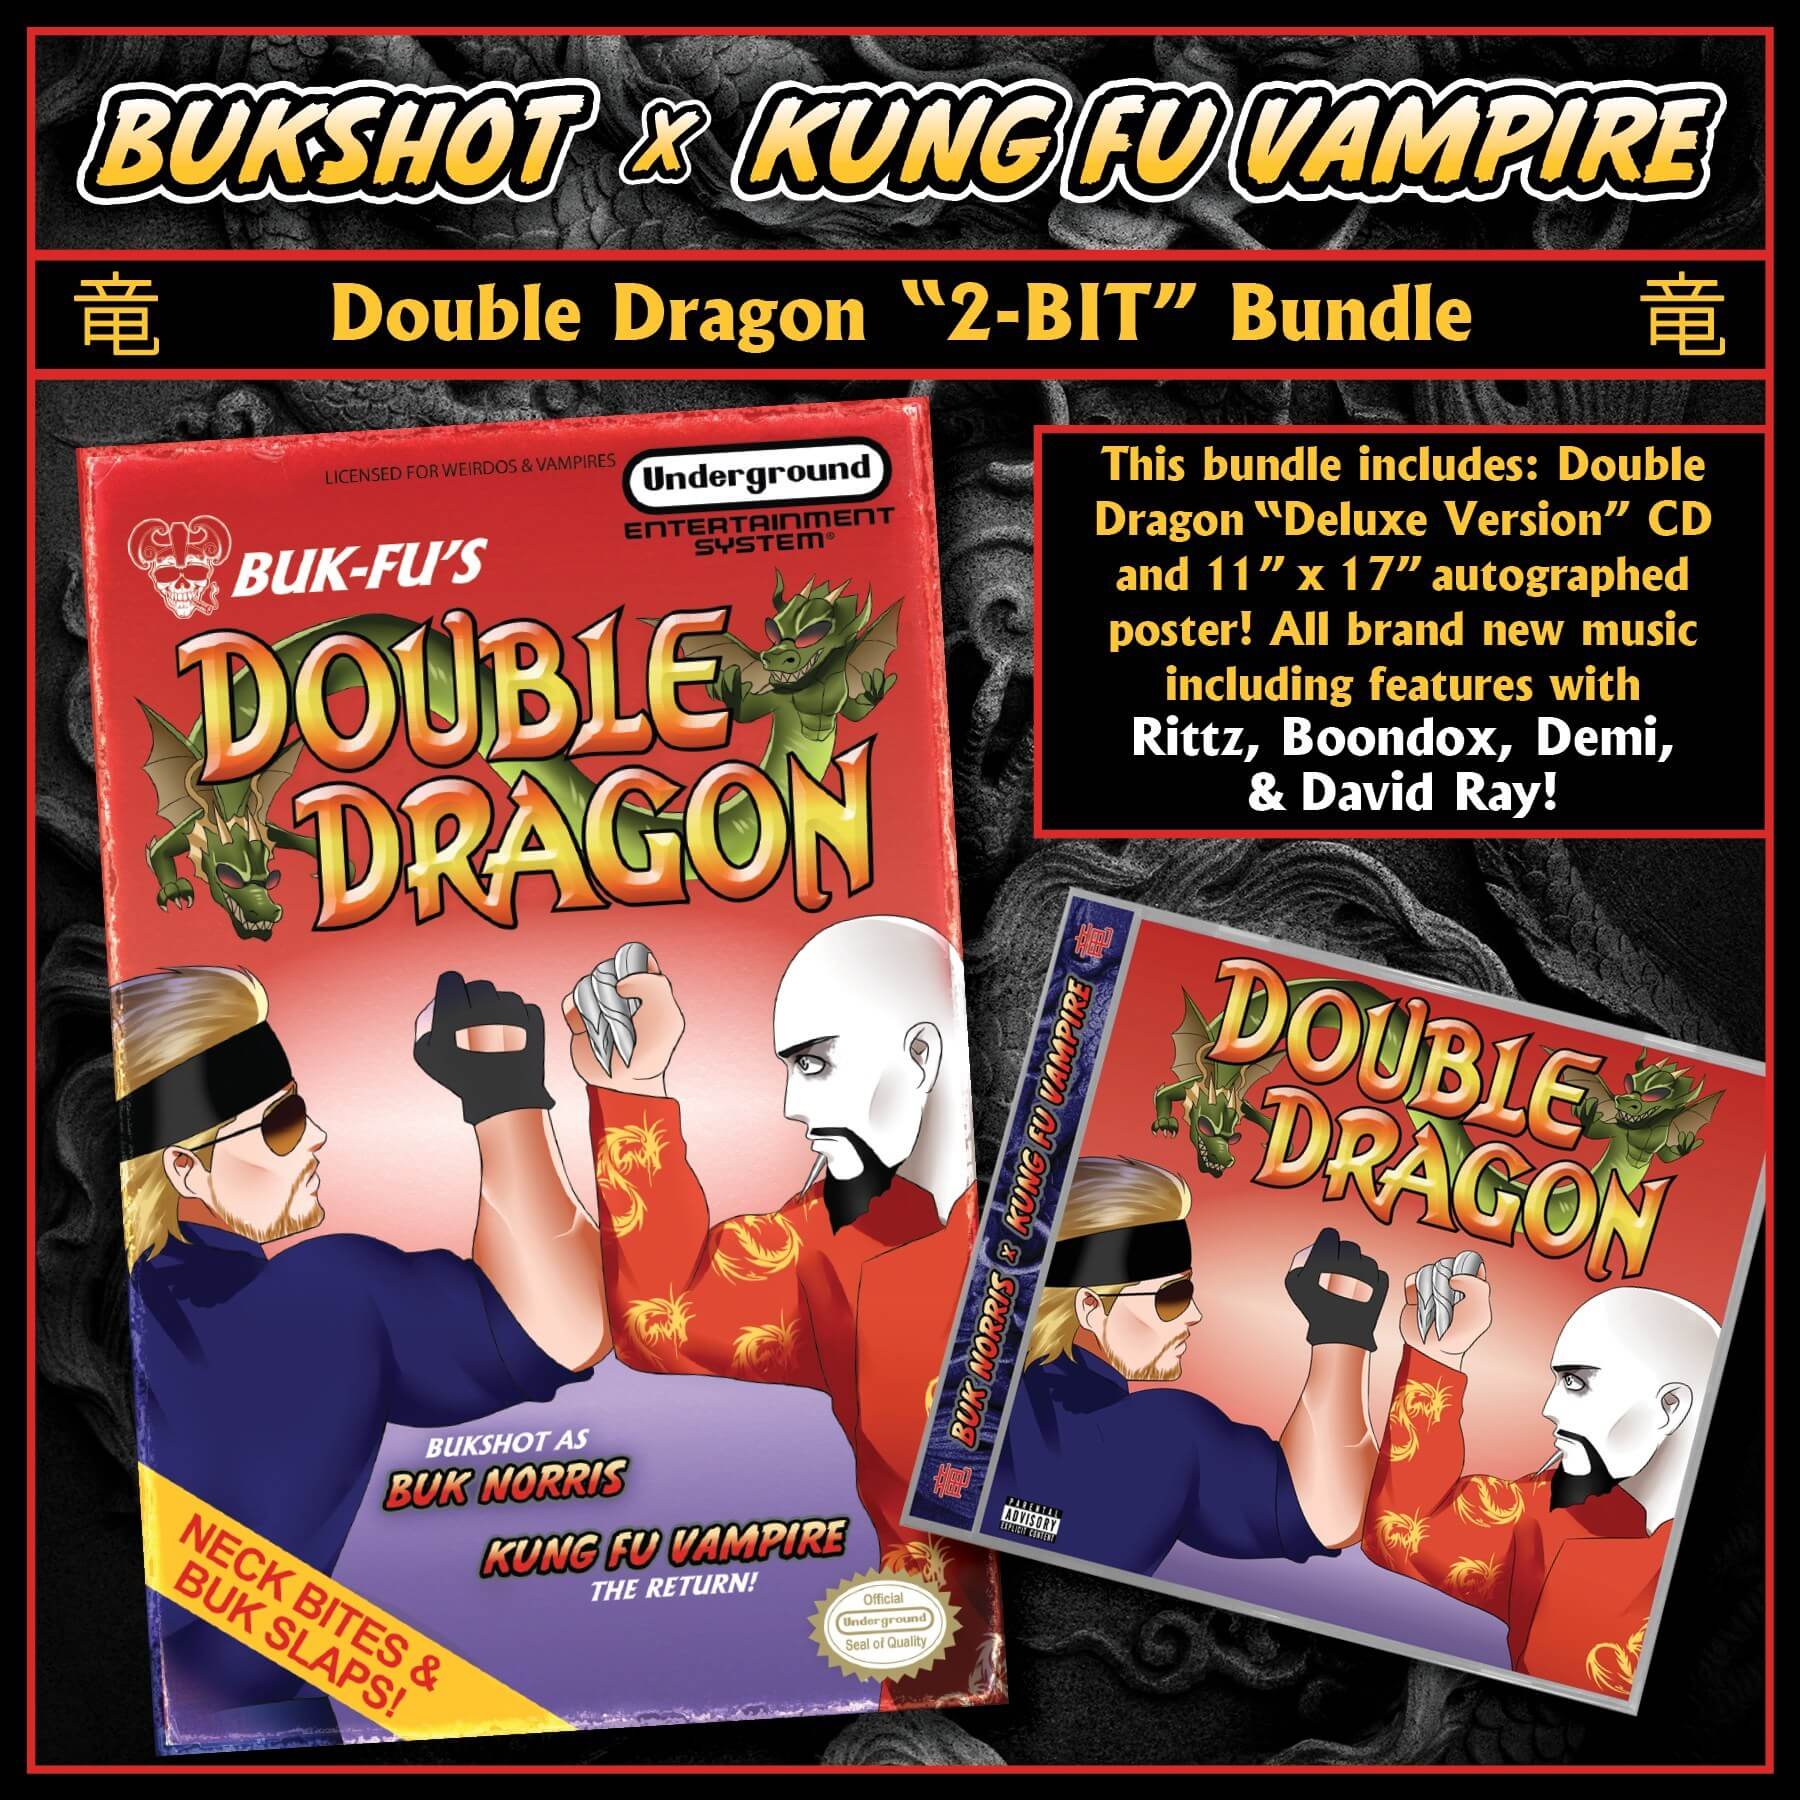 Double Dragon “2 Bit” Bundle - Kung Fu Vampire